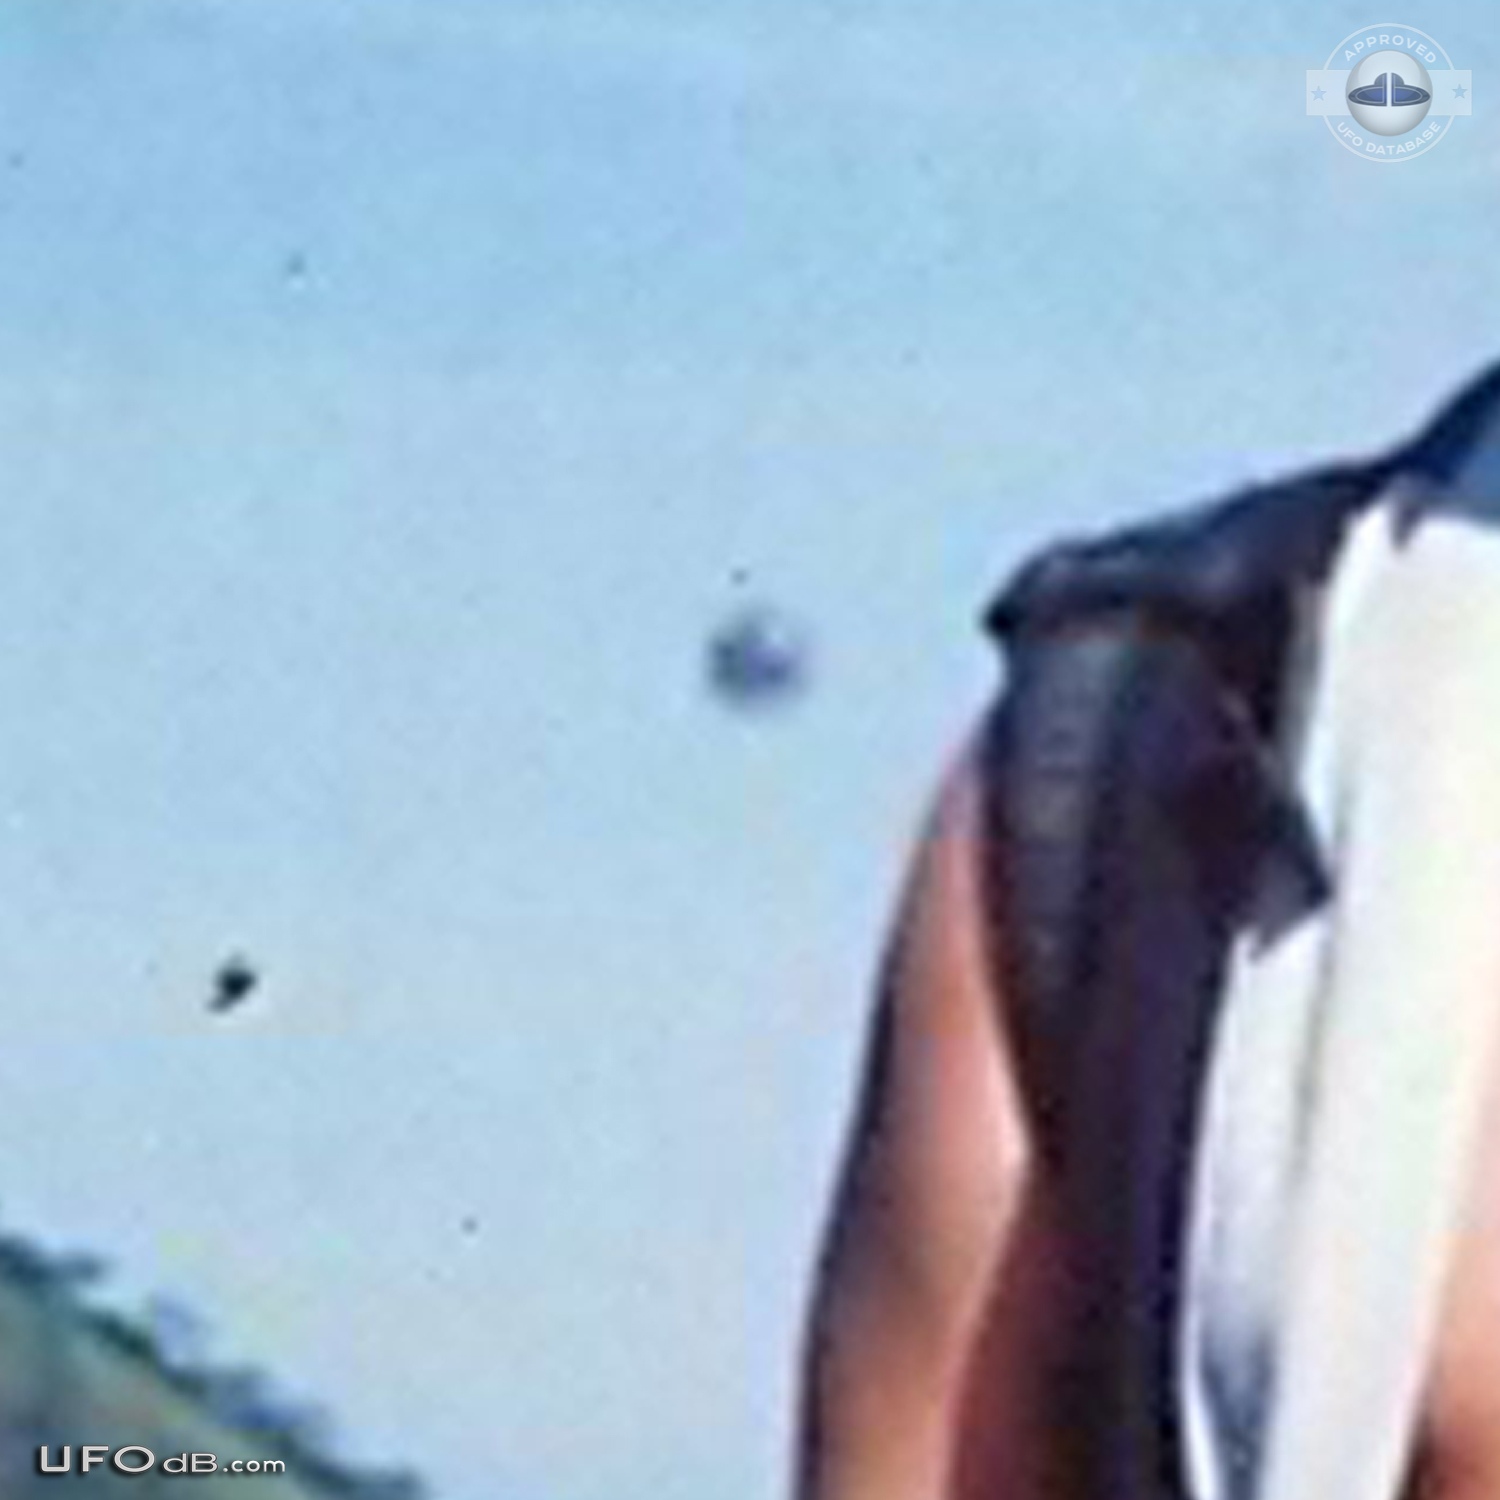 UFO caught on picture in remote district of Sana, Macae, Brazil - 2008 UFO Picture #533-3